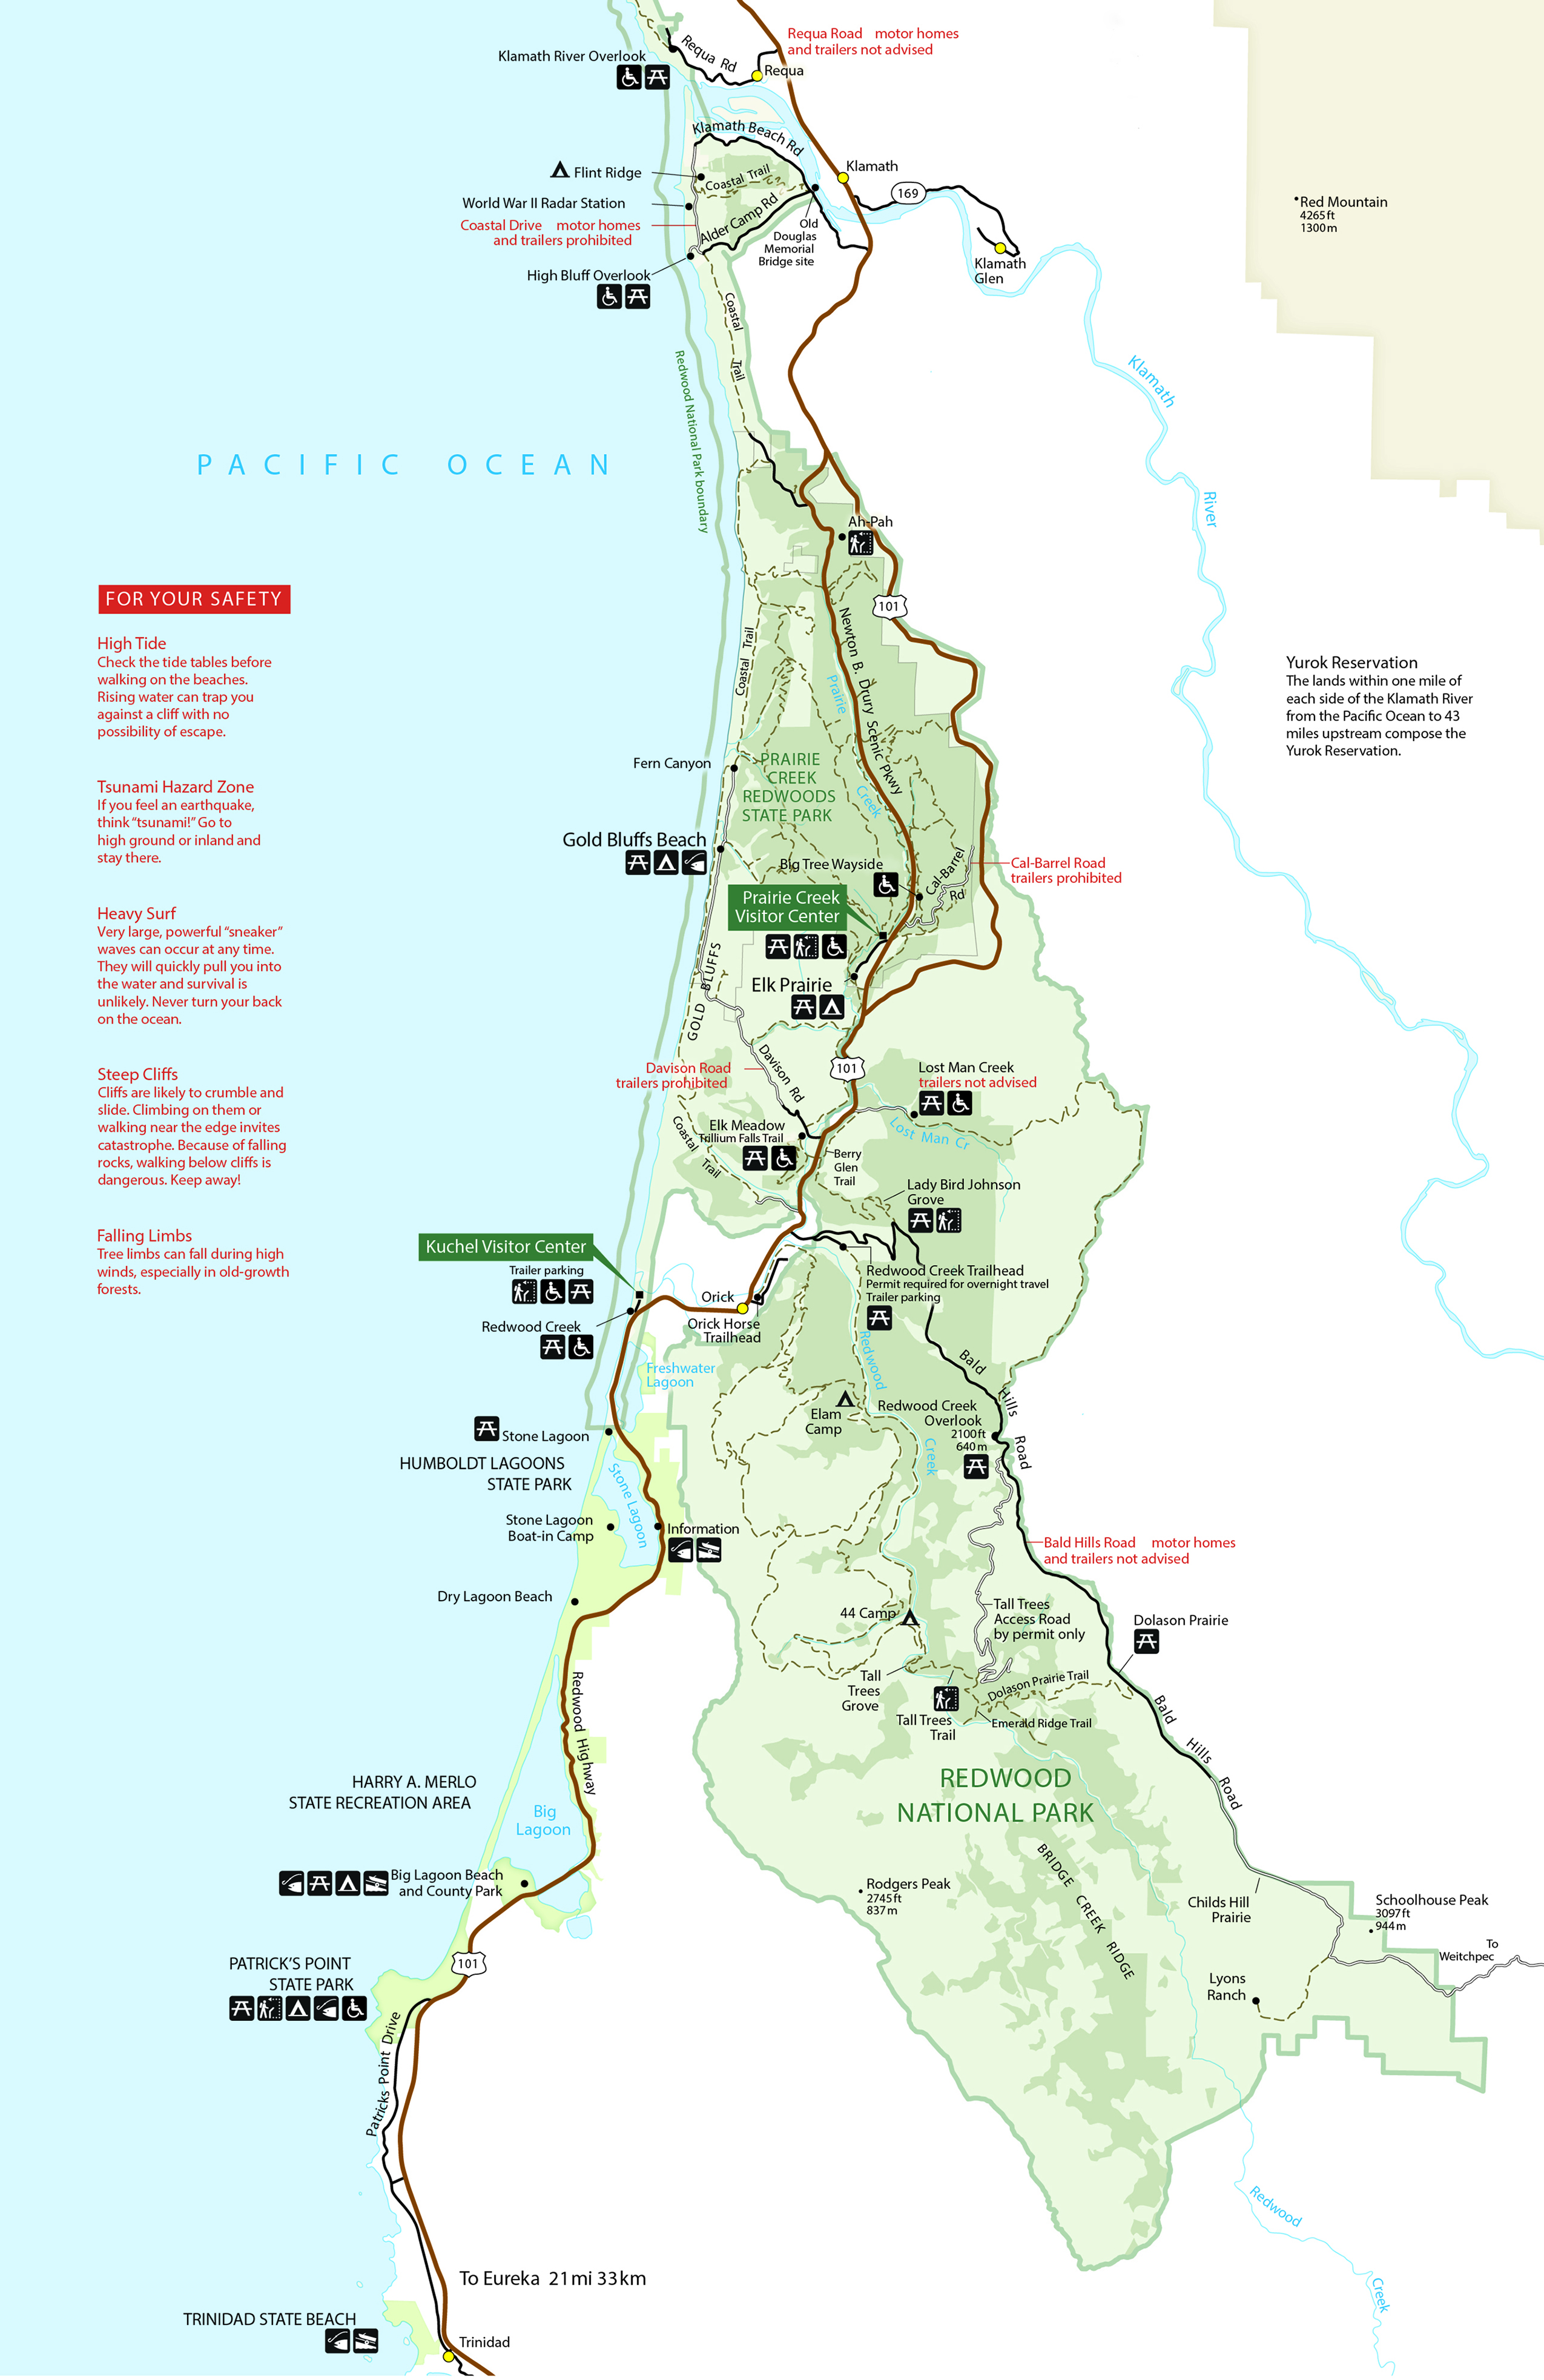 Redwood National Park California Map Maps   Redwood National and State Parks (U.S. National Park Service)